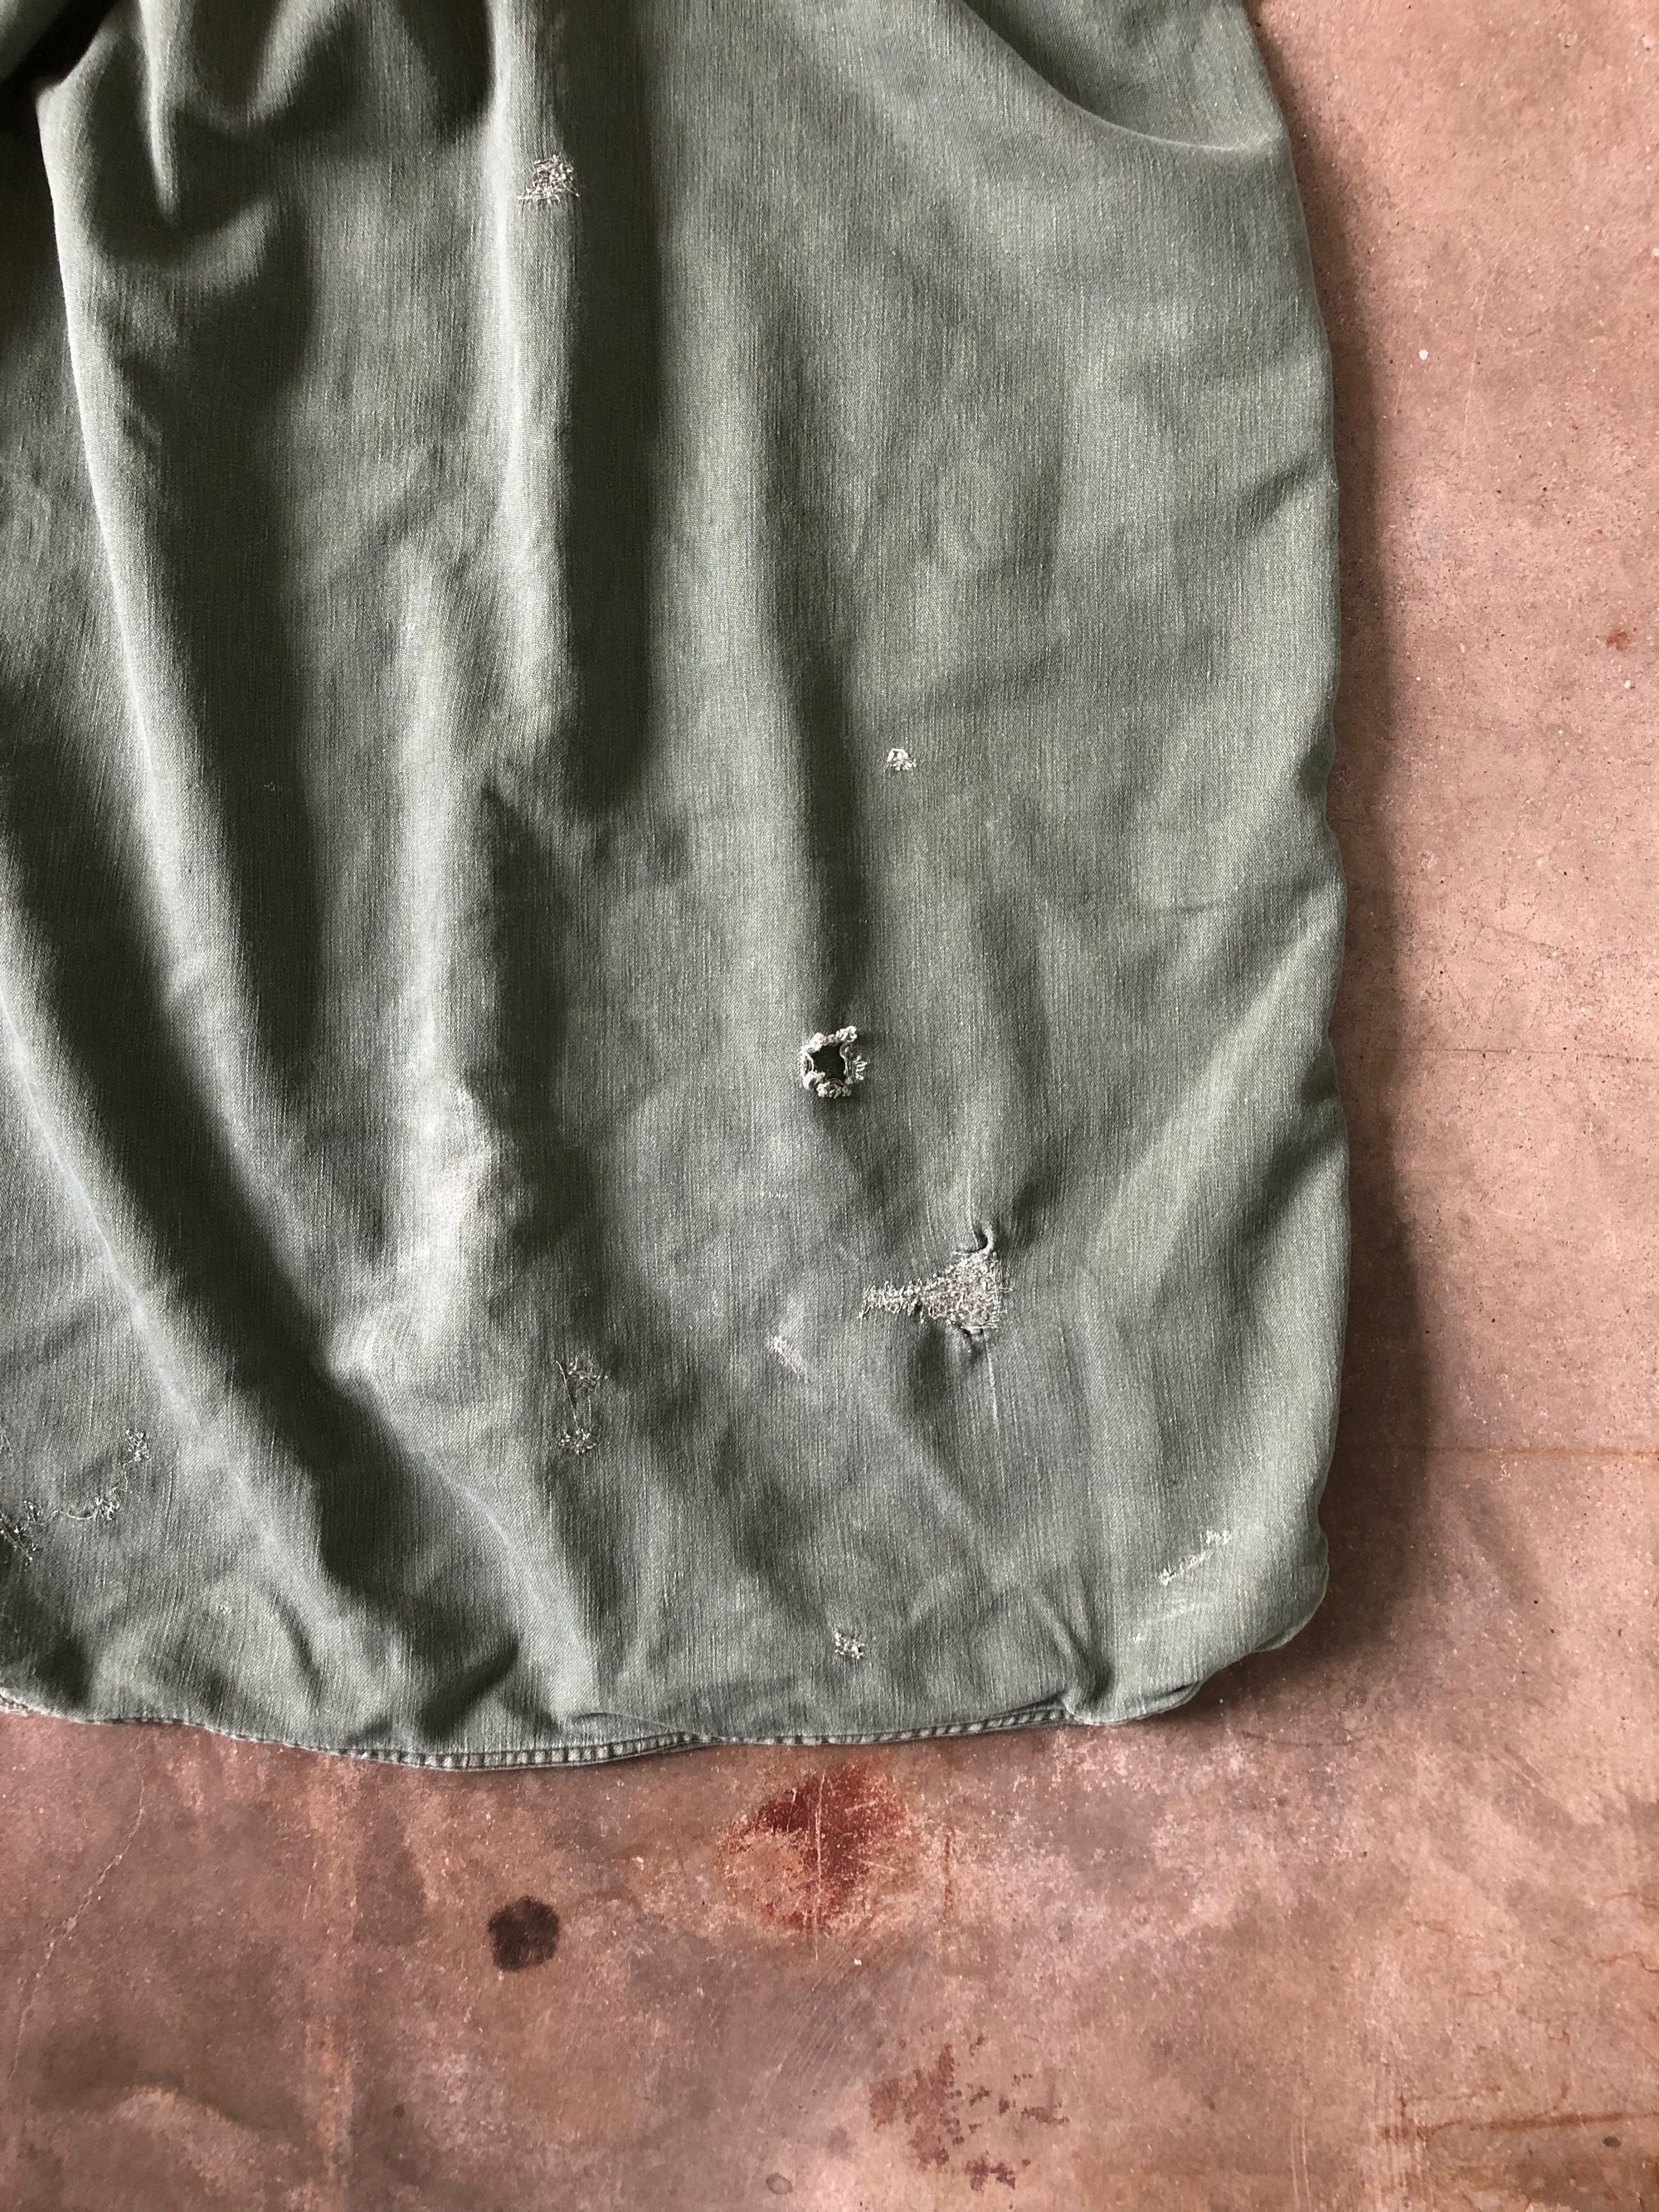 Vintage military bag